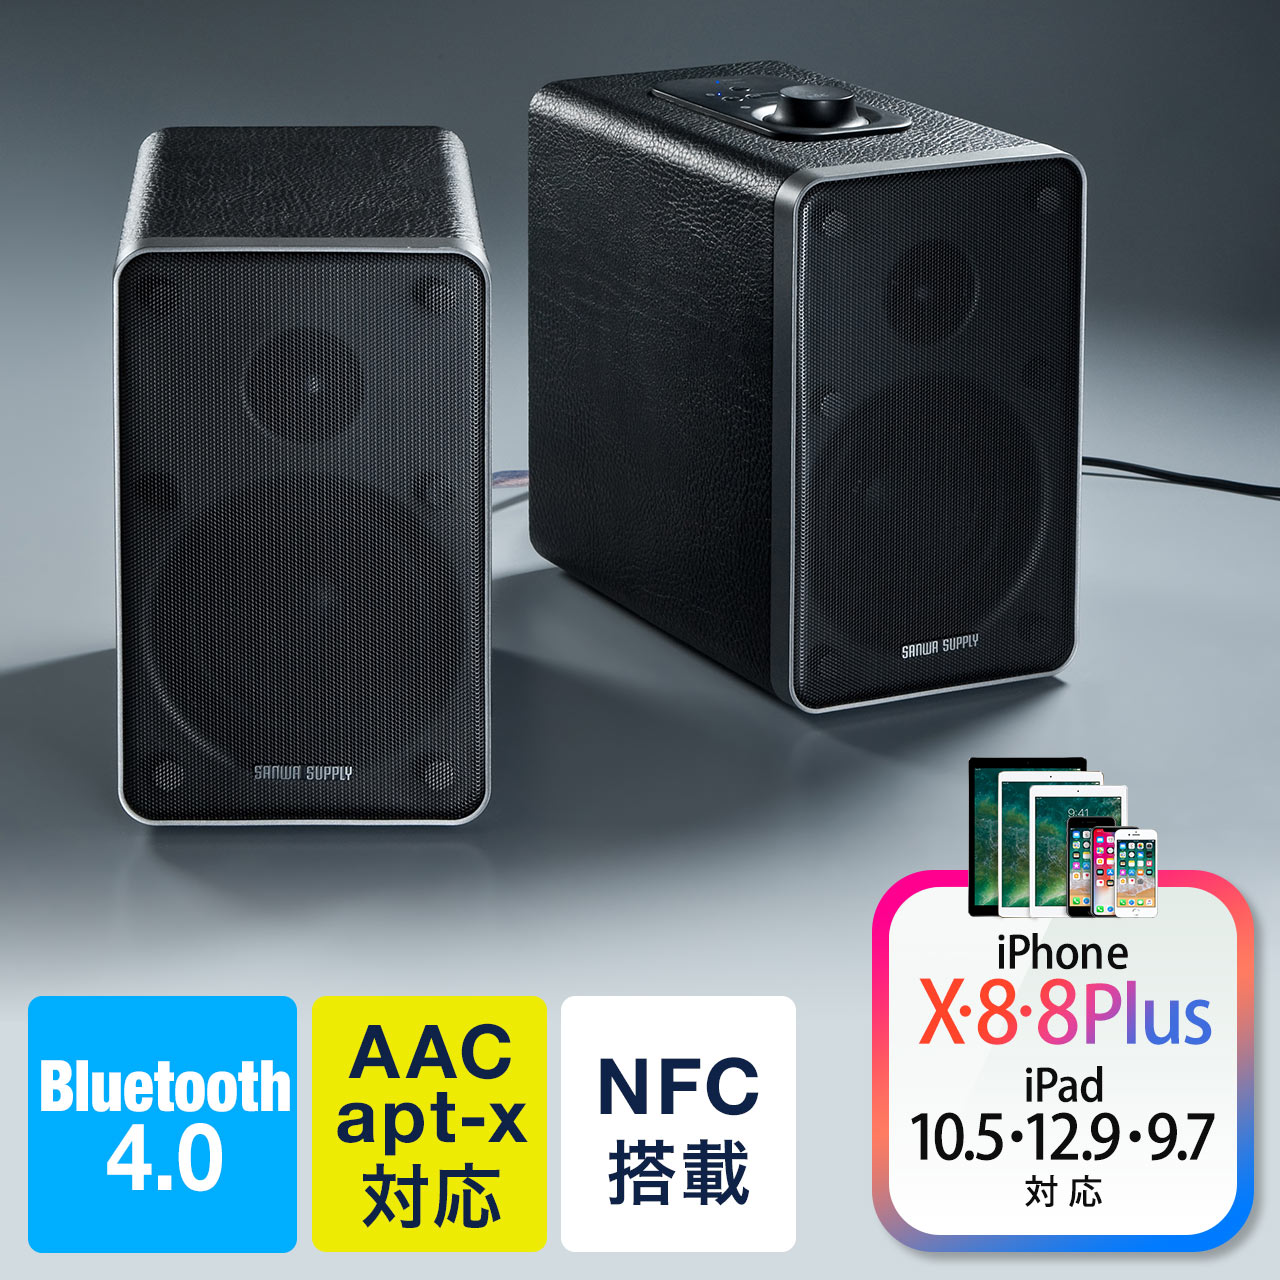 Bluetoothスピーカー 高音質 重低音 木製 レザー調本体 2ch c Apt X 400 Sp071bk 通販 サンワダイレクト